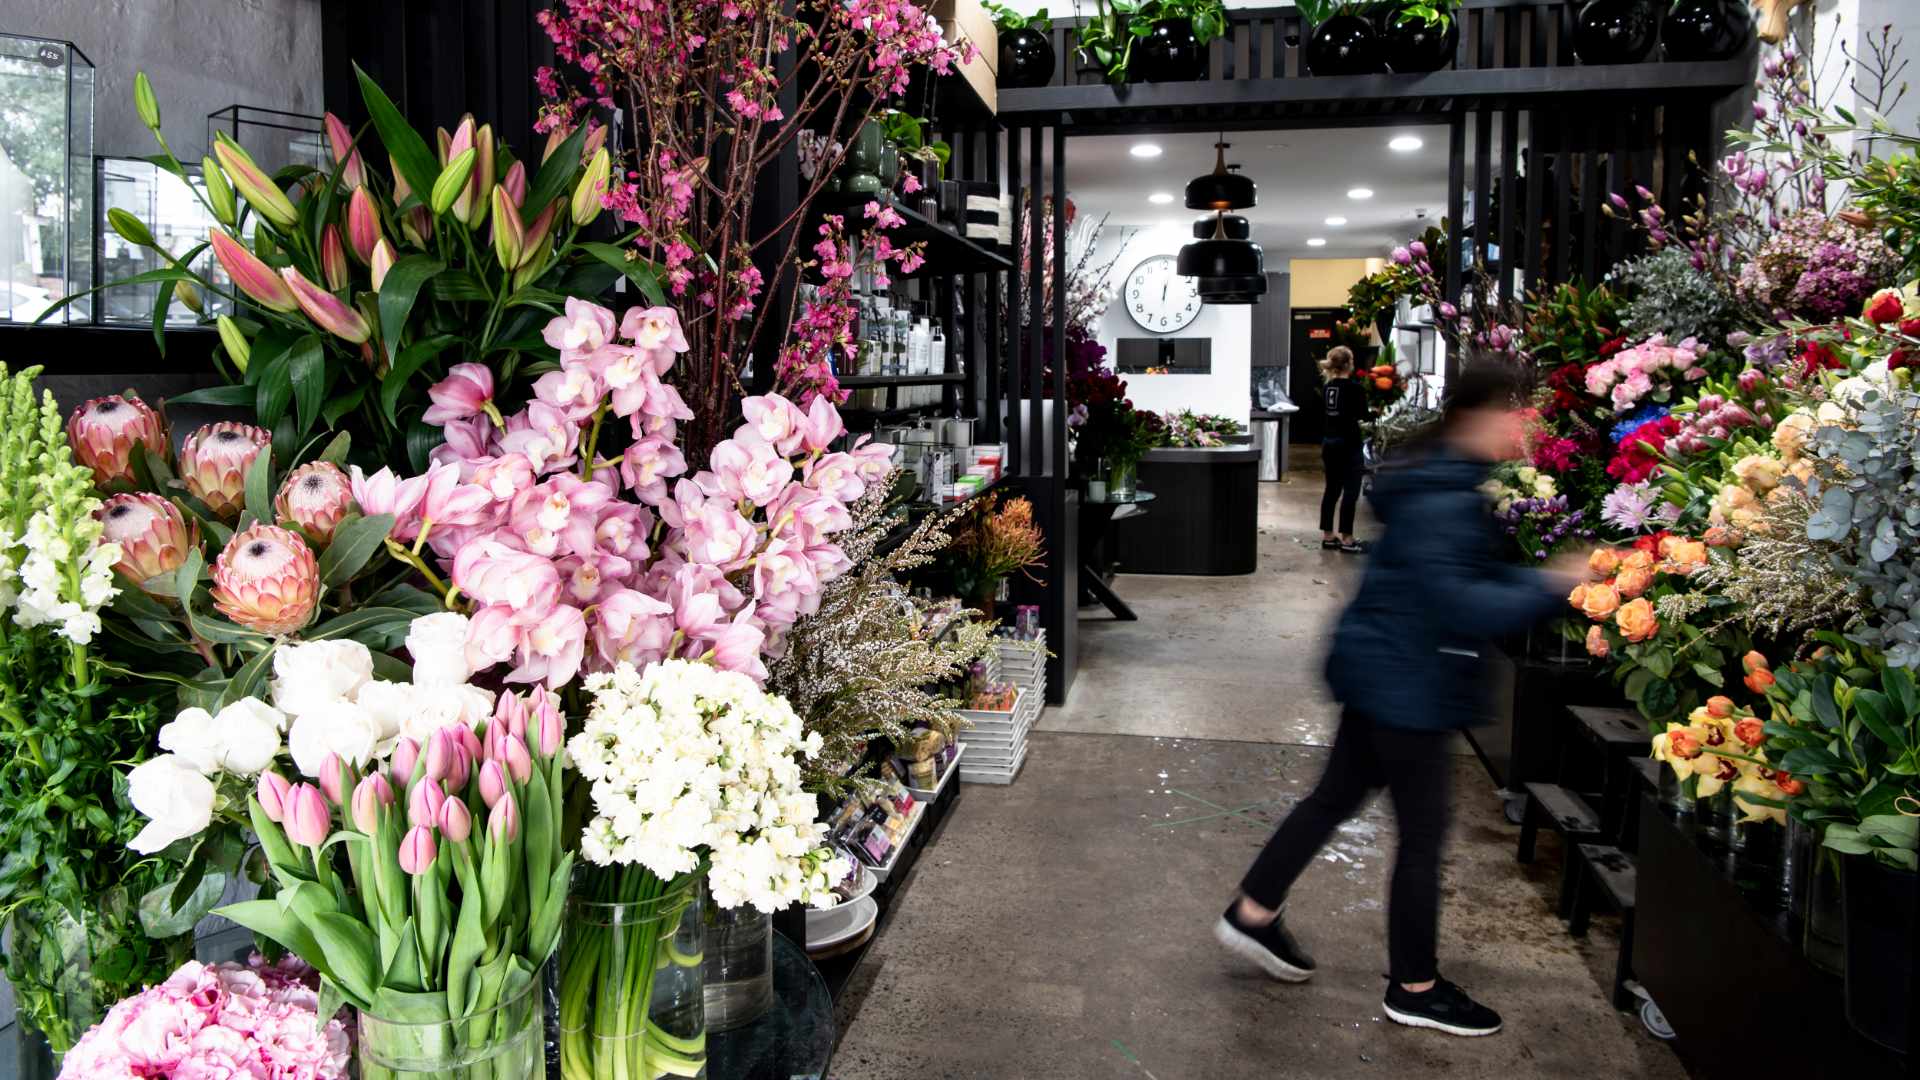 Florist moving around vases of flowers at Flowers on Norton Street